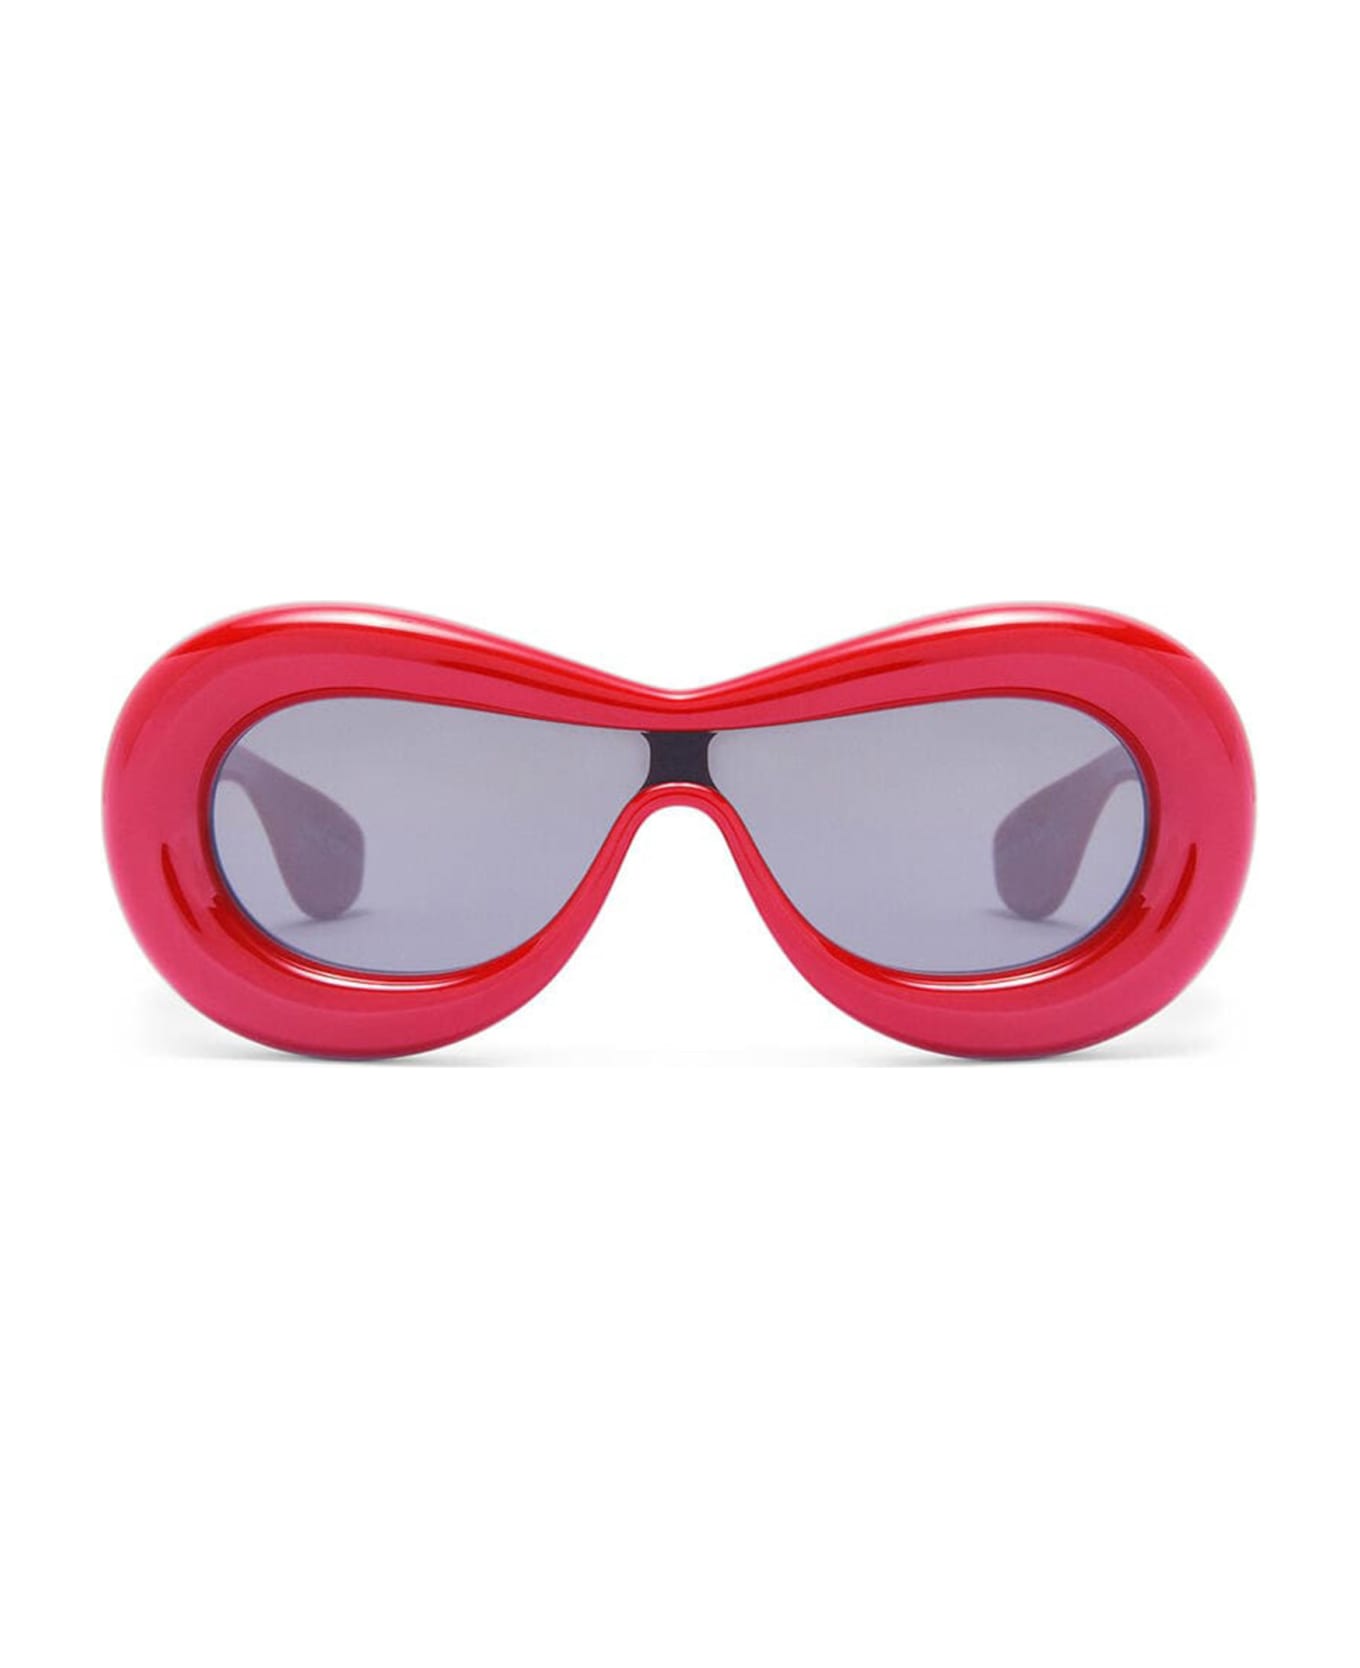 Loewe Lw40099i - Red Lipstick Sunglasses - red